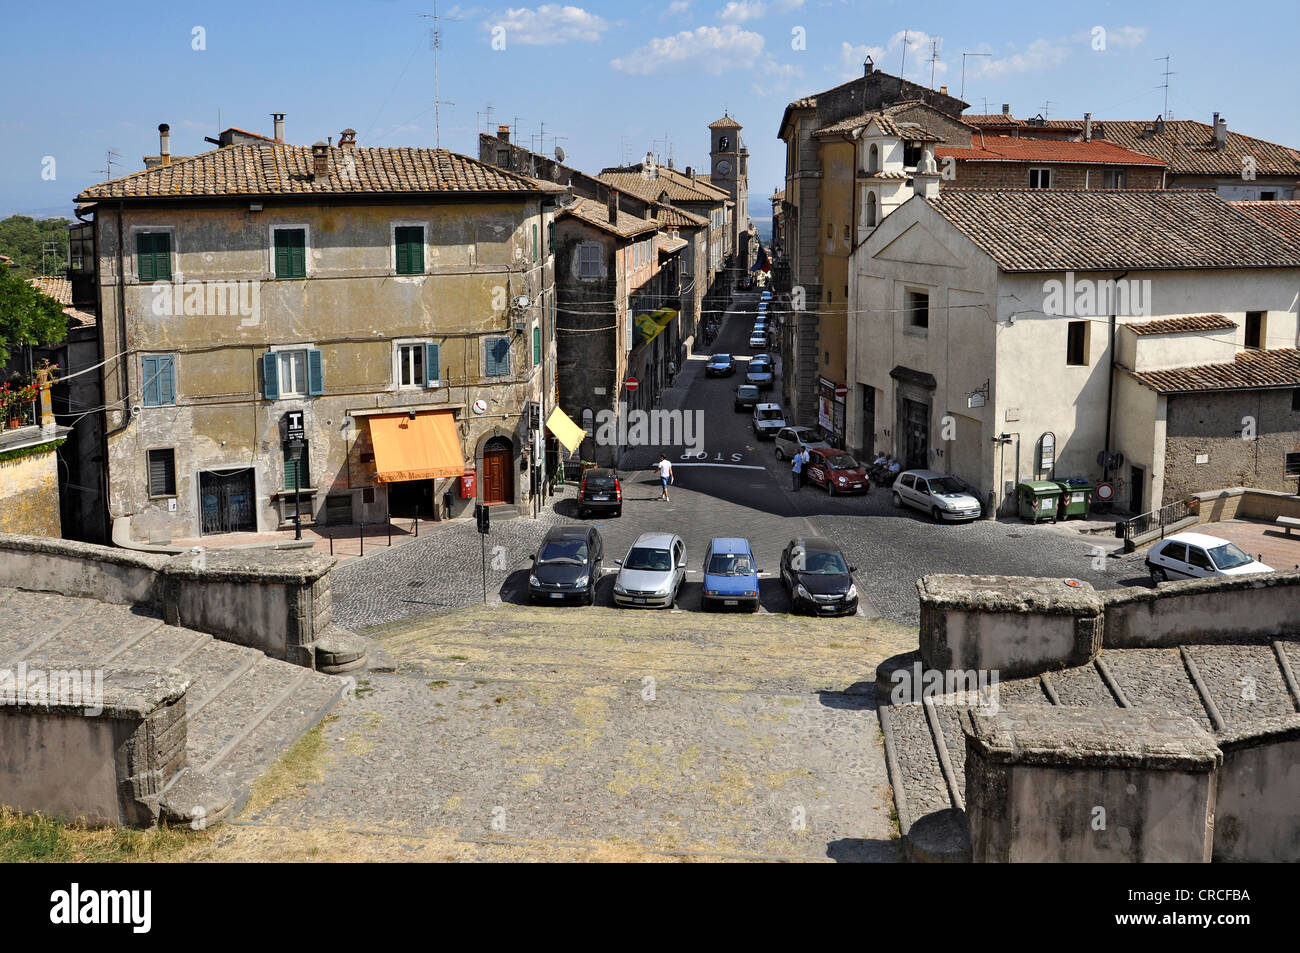 View from the palazzo in Fortezza, palace, Villa Farnese, Caprarola, Latium region, Italy, Europe Stock Photo